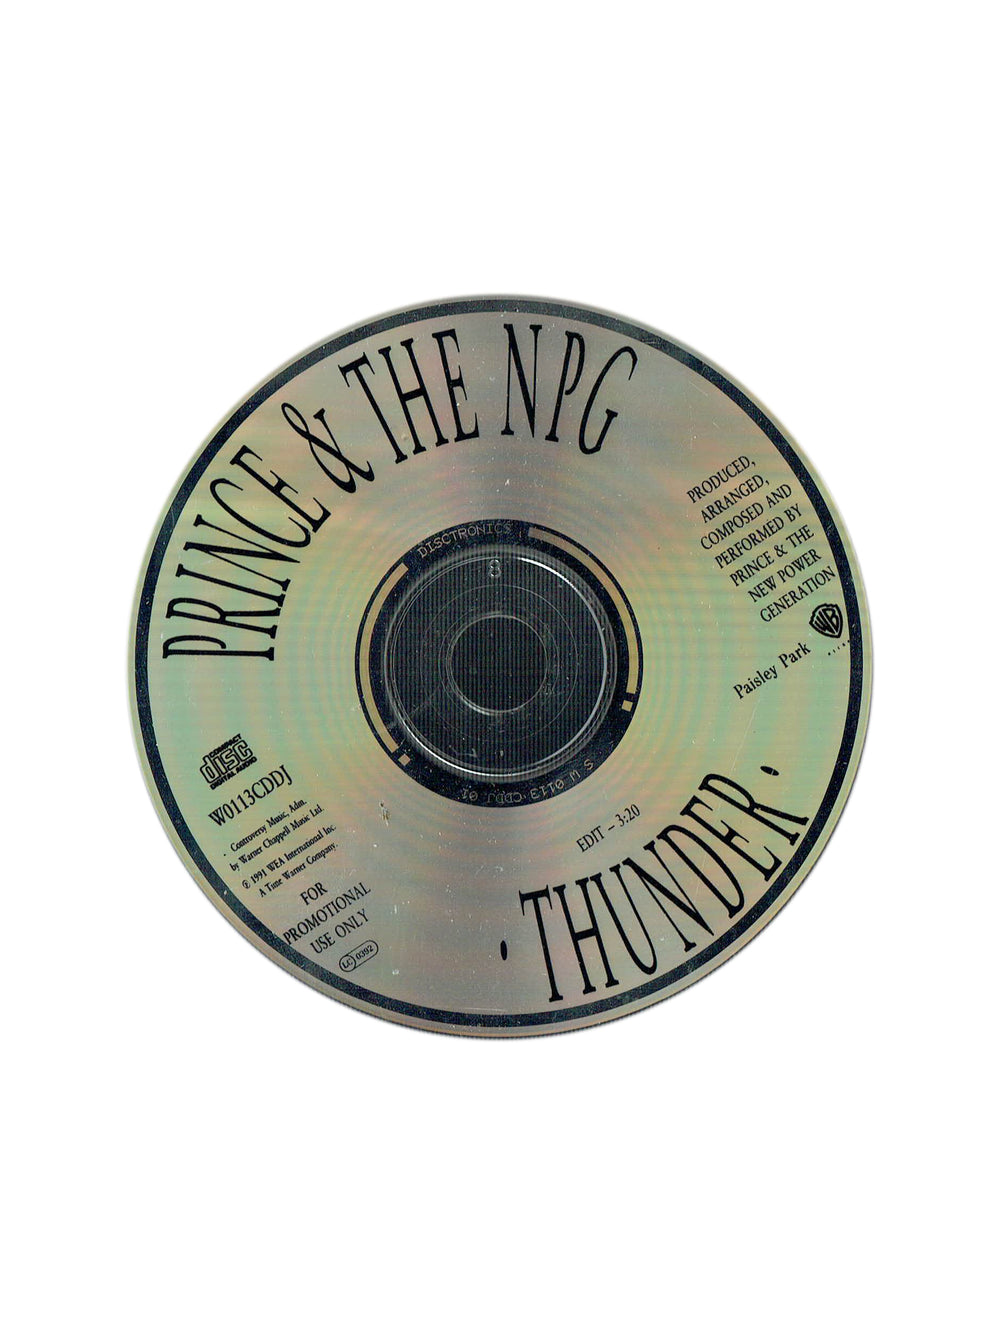 Prince & The NPG Thunder Promotional Only CD Single W0113CDDJ Ultra Rare